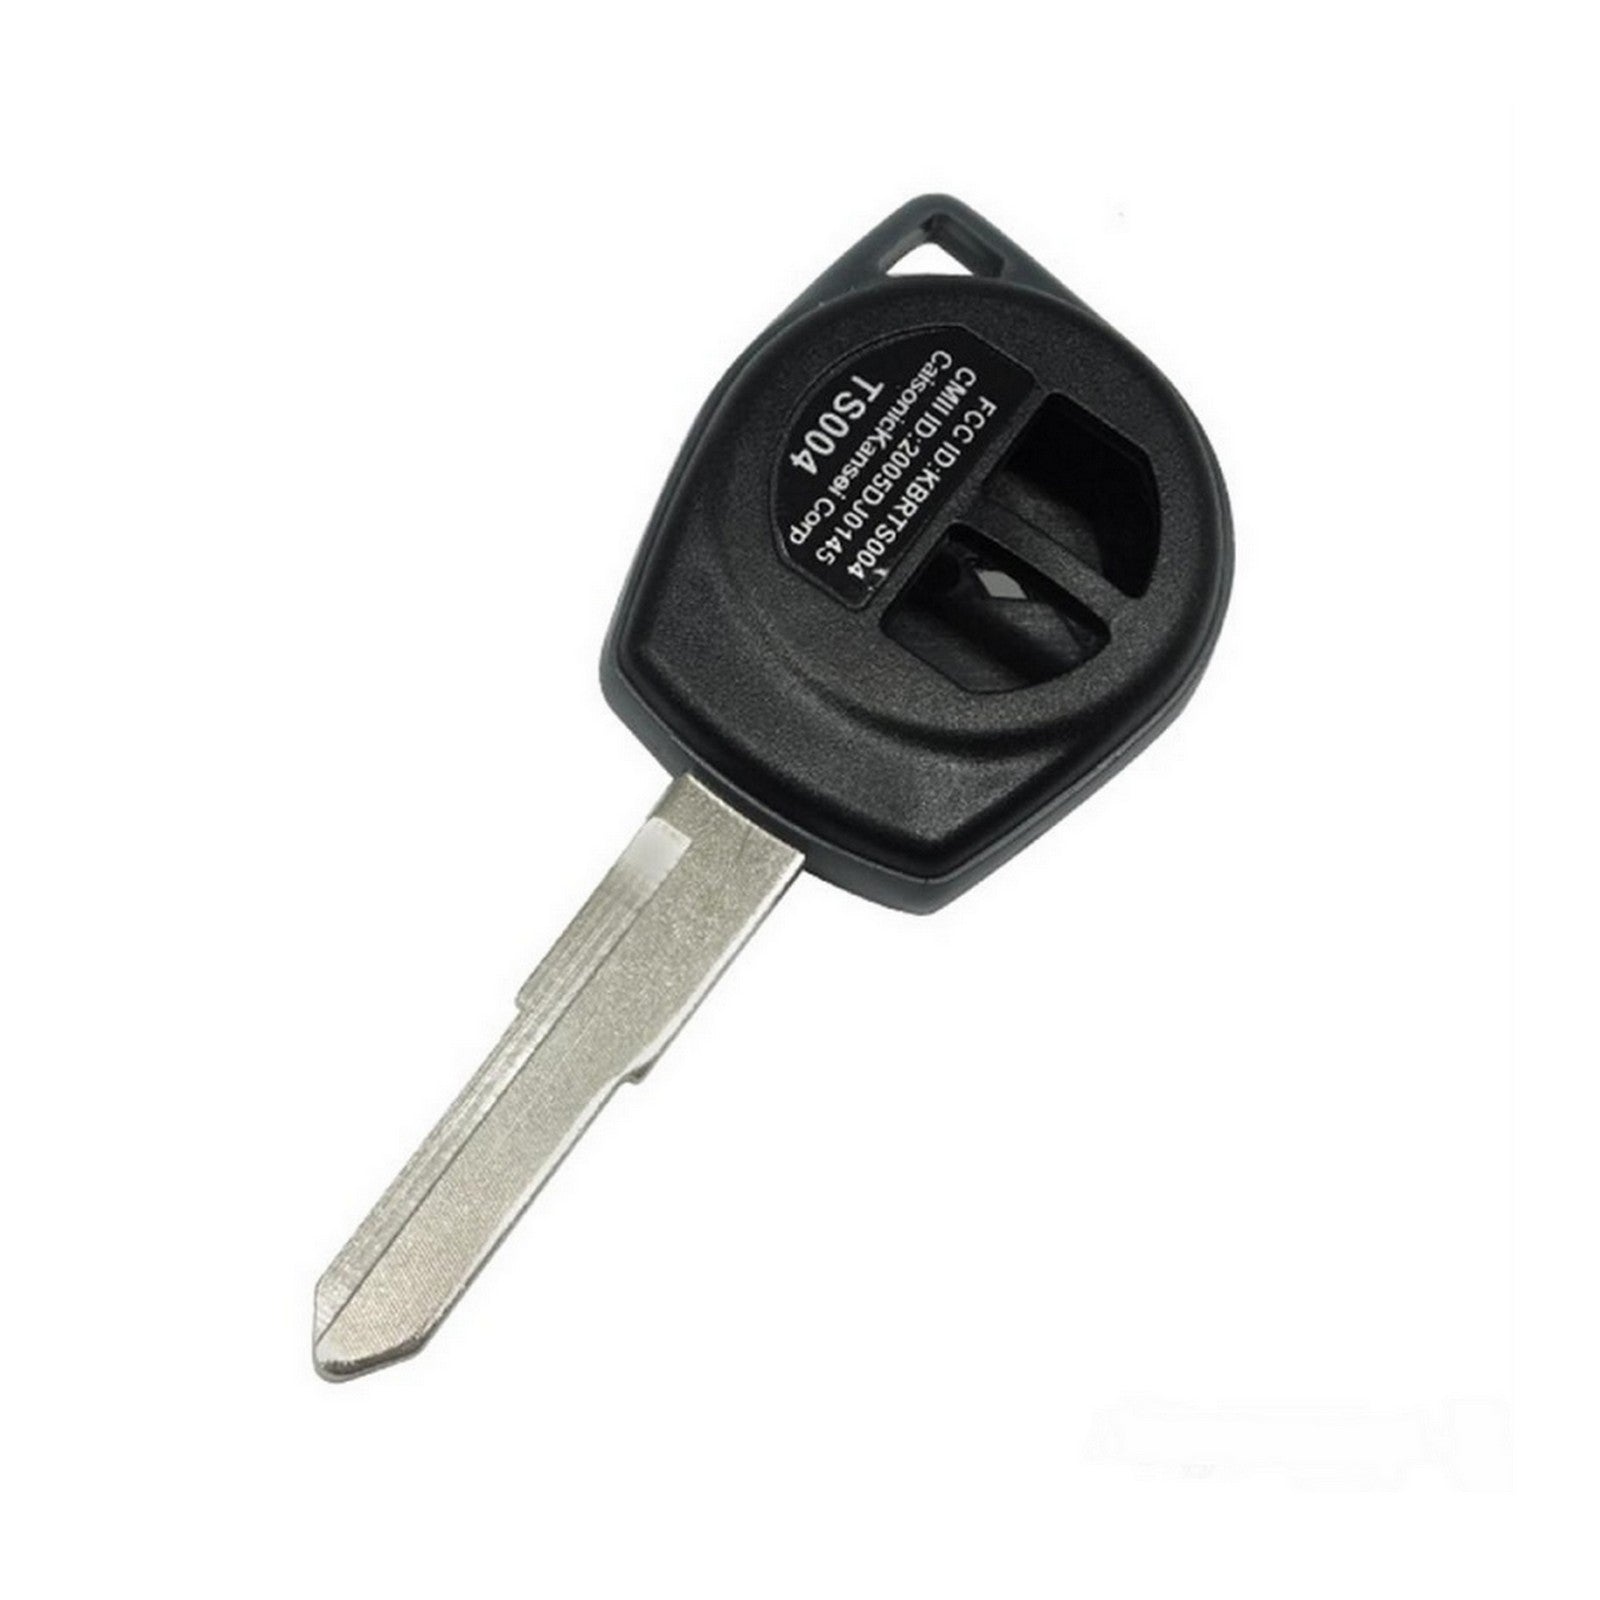 Suzuki Cars Replacement Key Cover, Hard Key shell